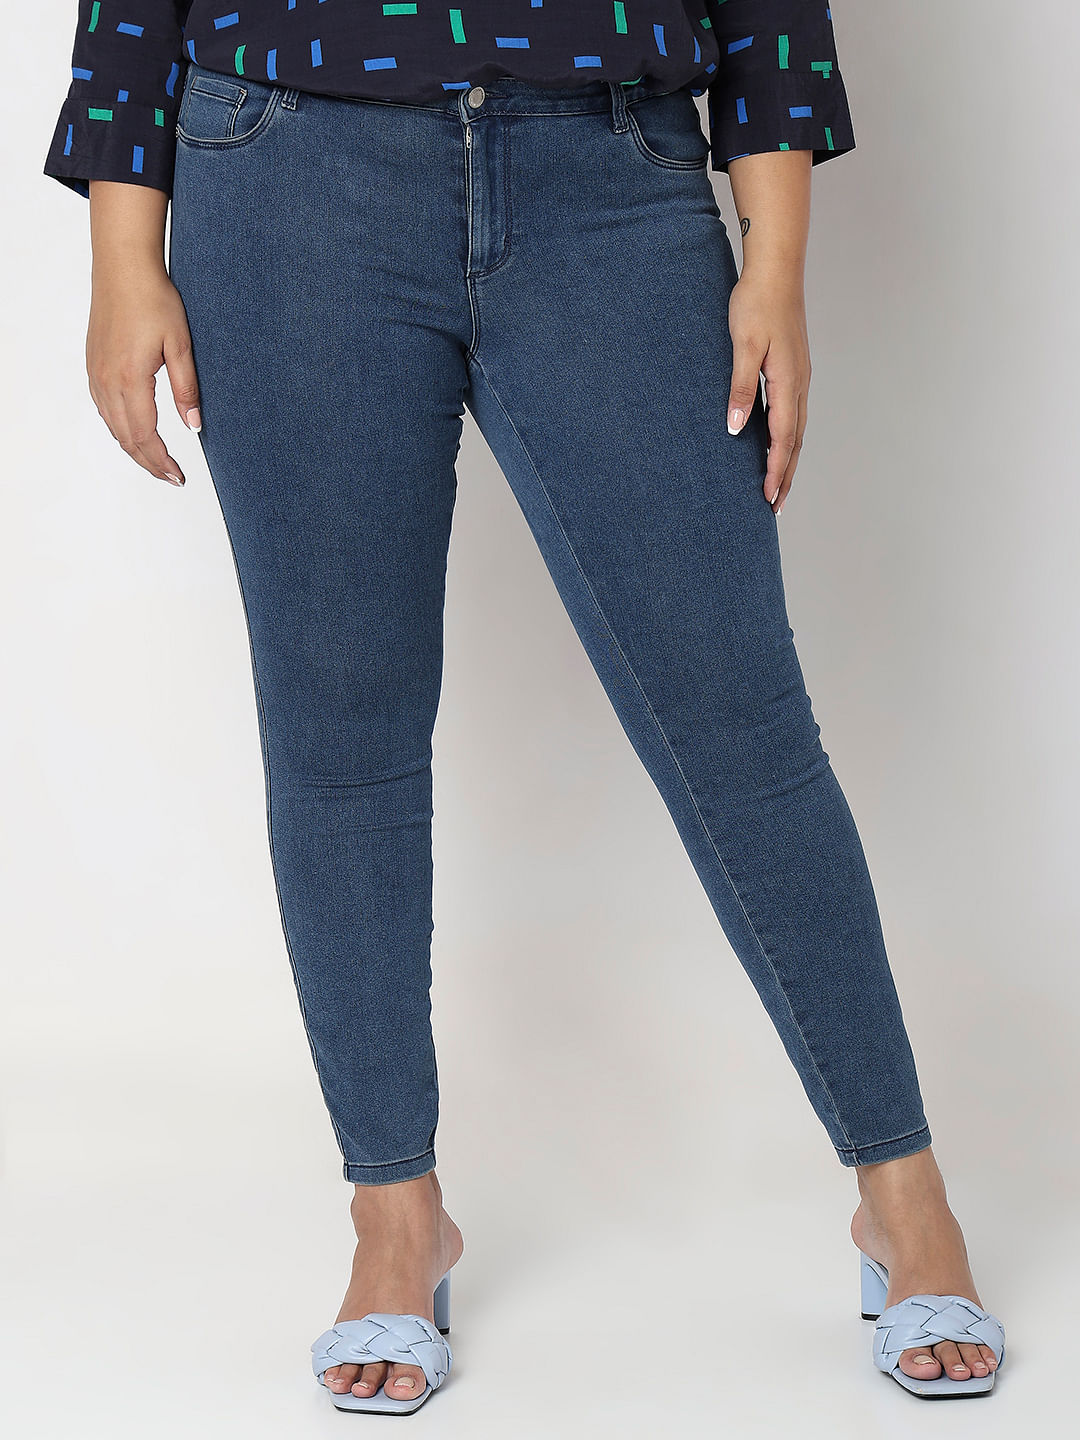 Buy Black Low Rise Skinny Jeans For Women Online in India  VeroModa